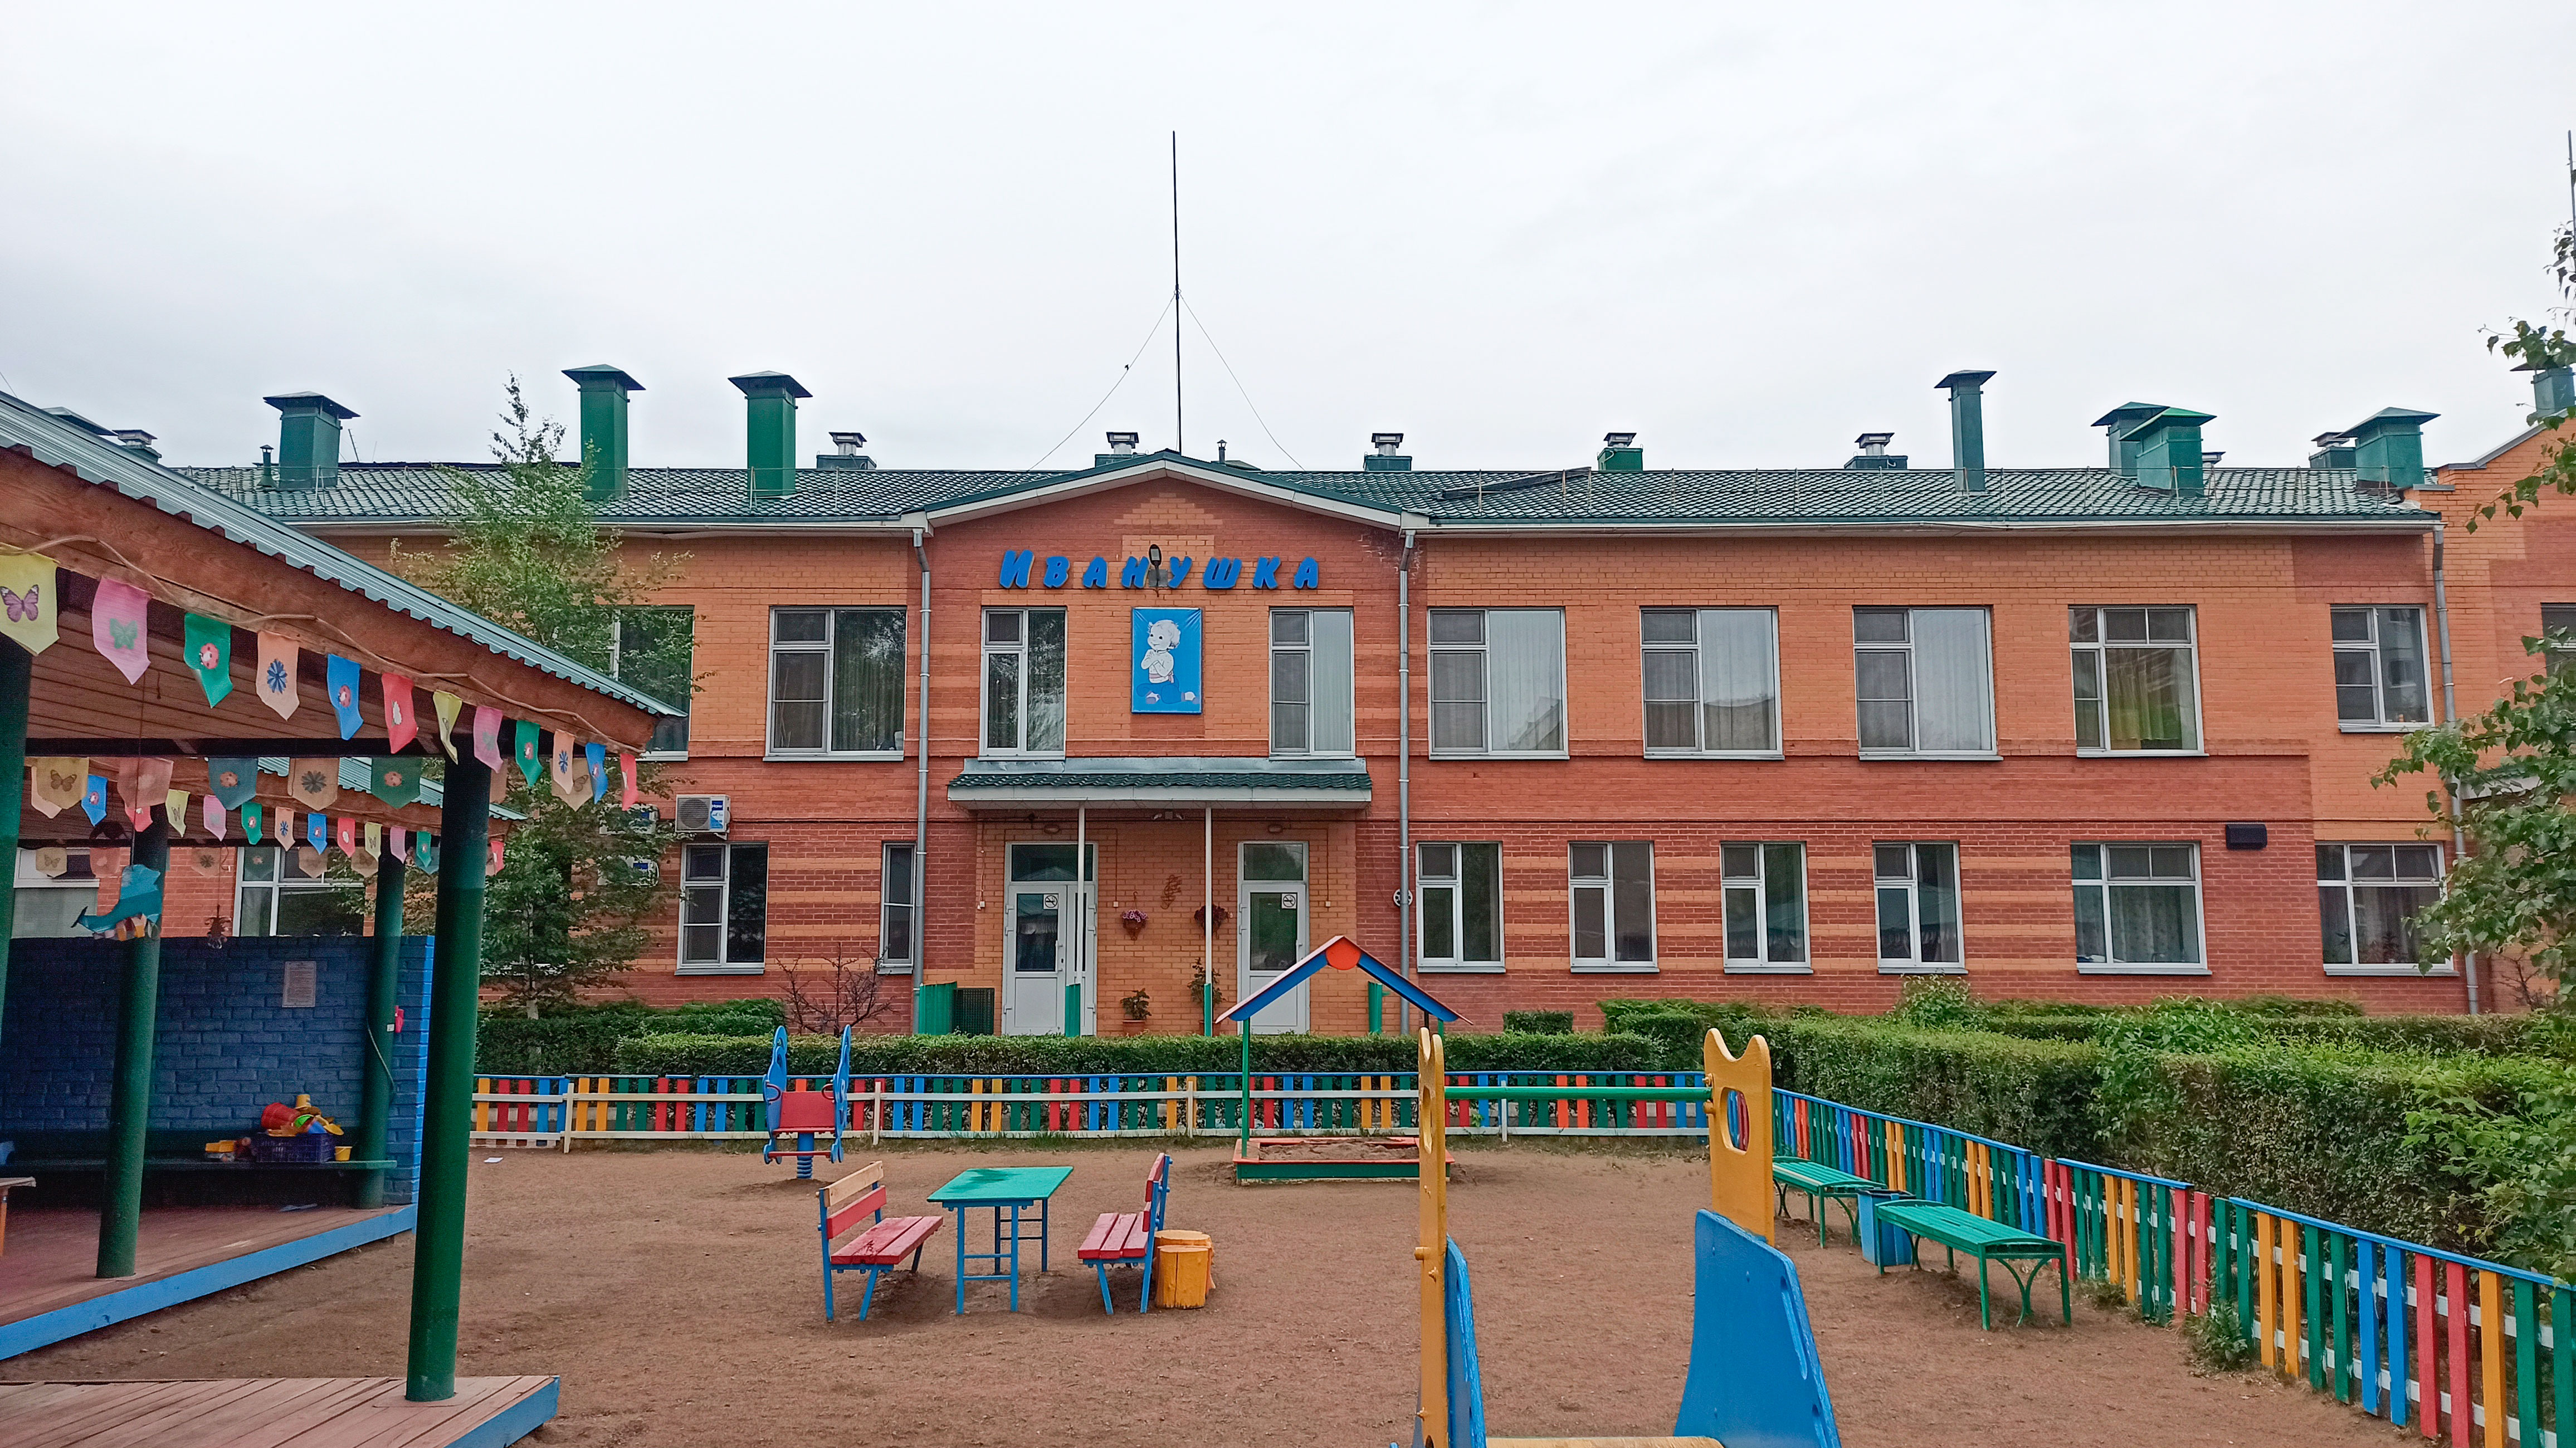 Фасад здания детского сада "Иванушка" в Абакане.